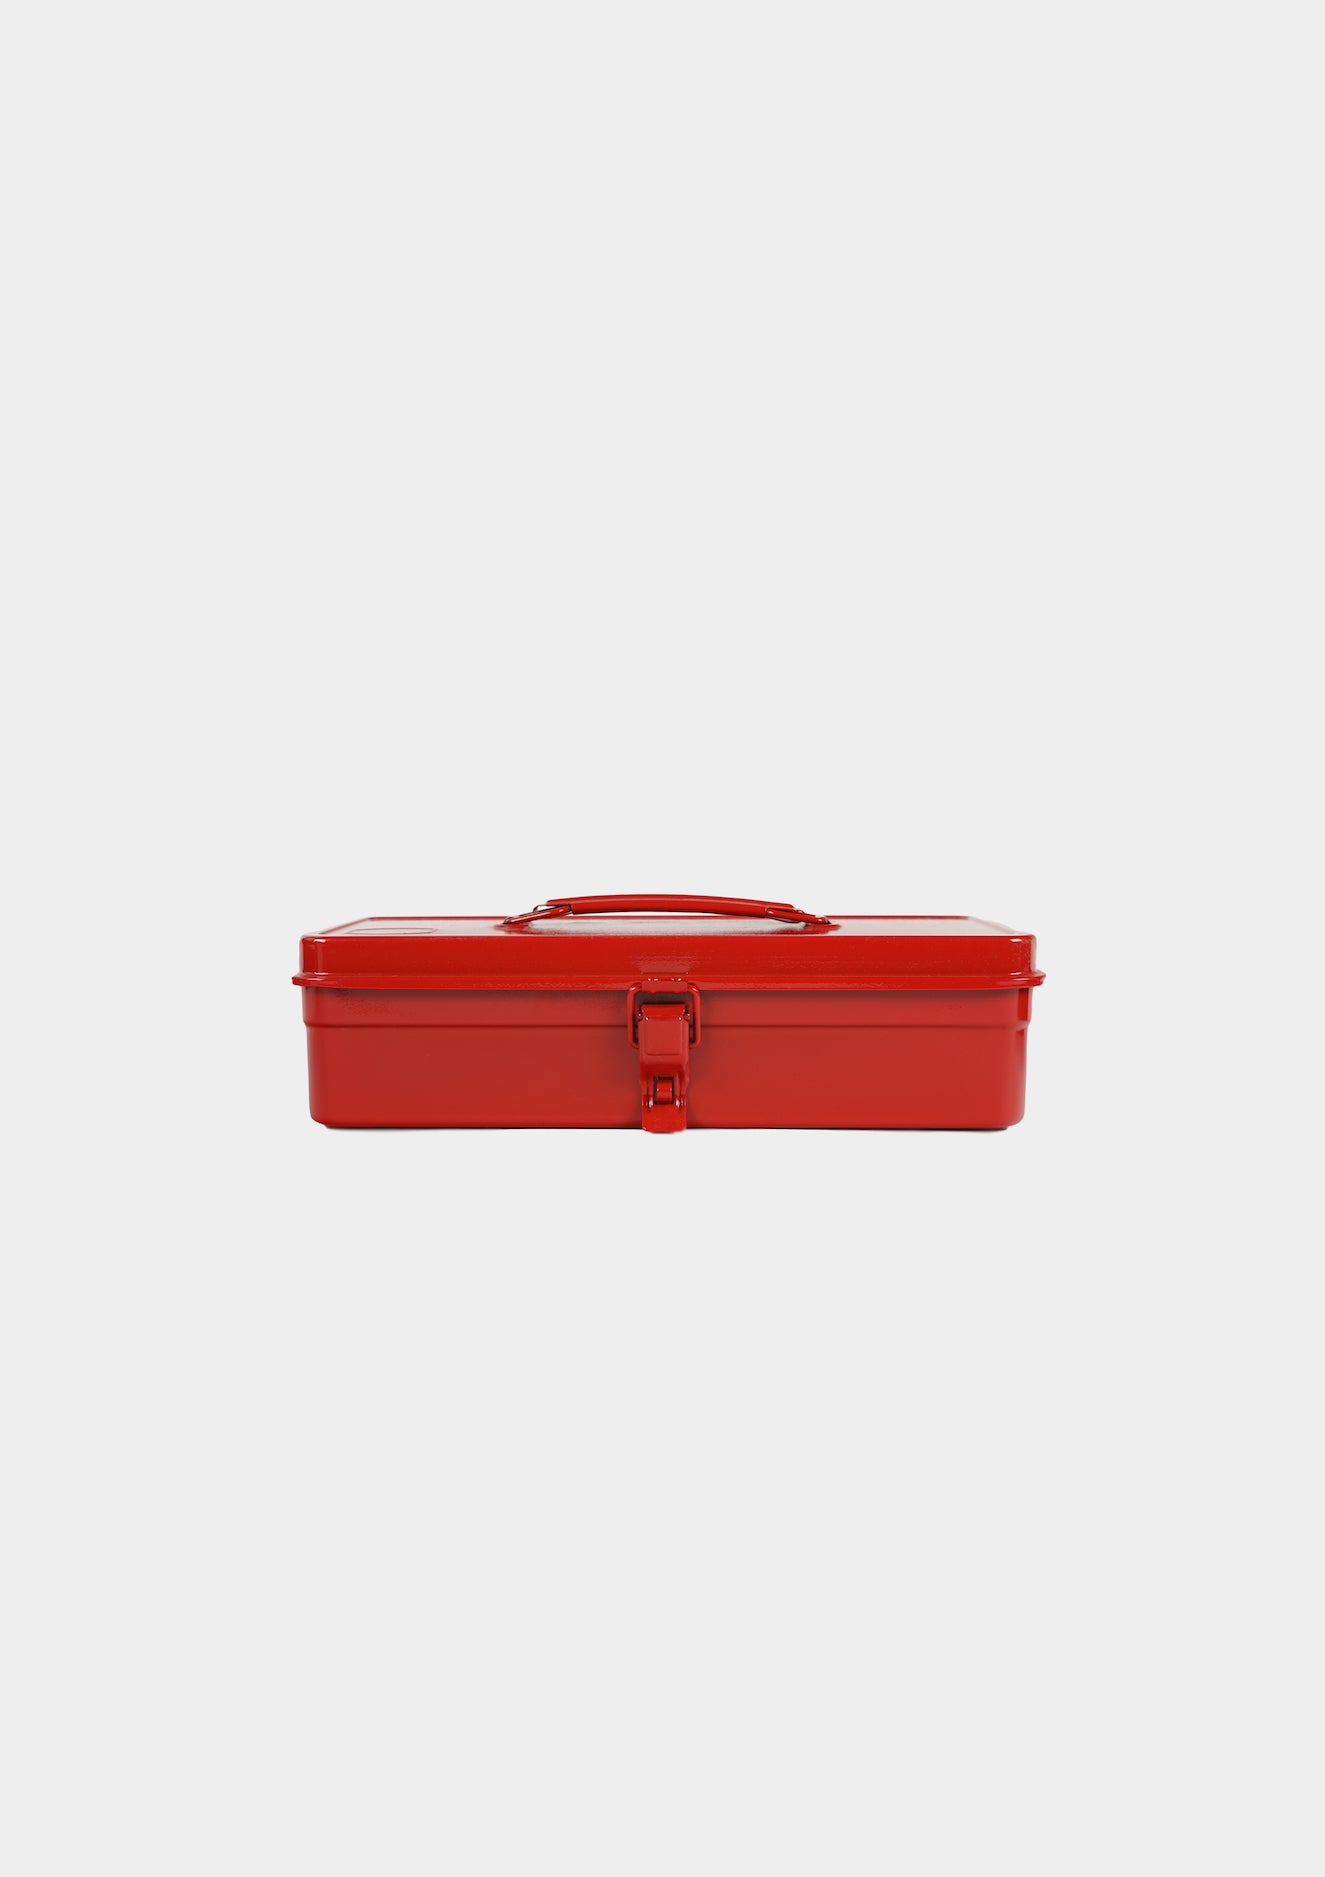 Toyo Tool Boxes - Flat Top